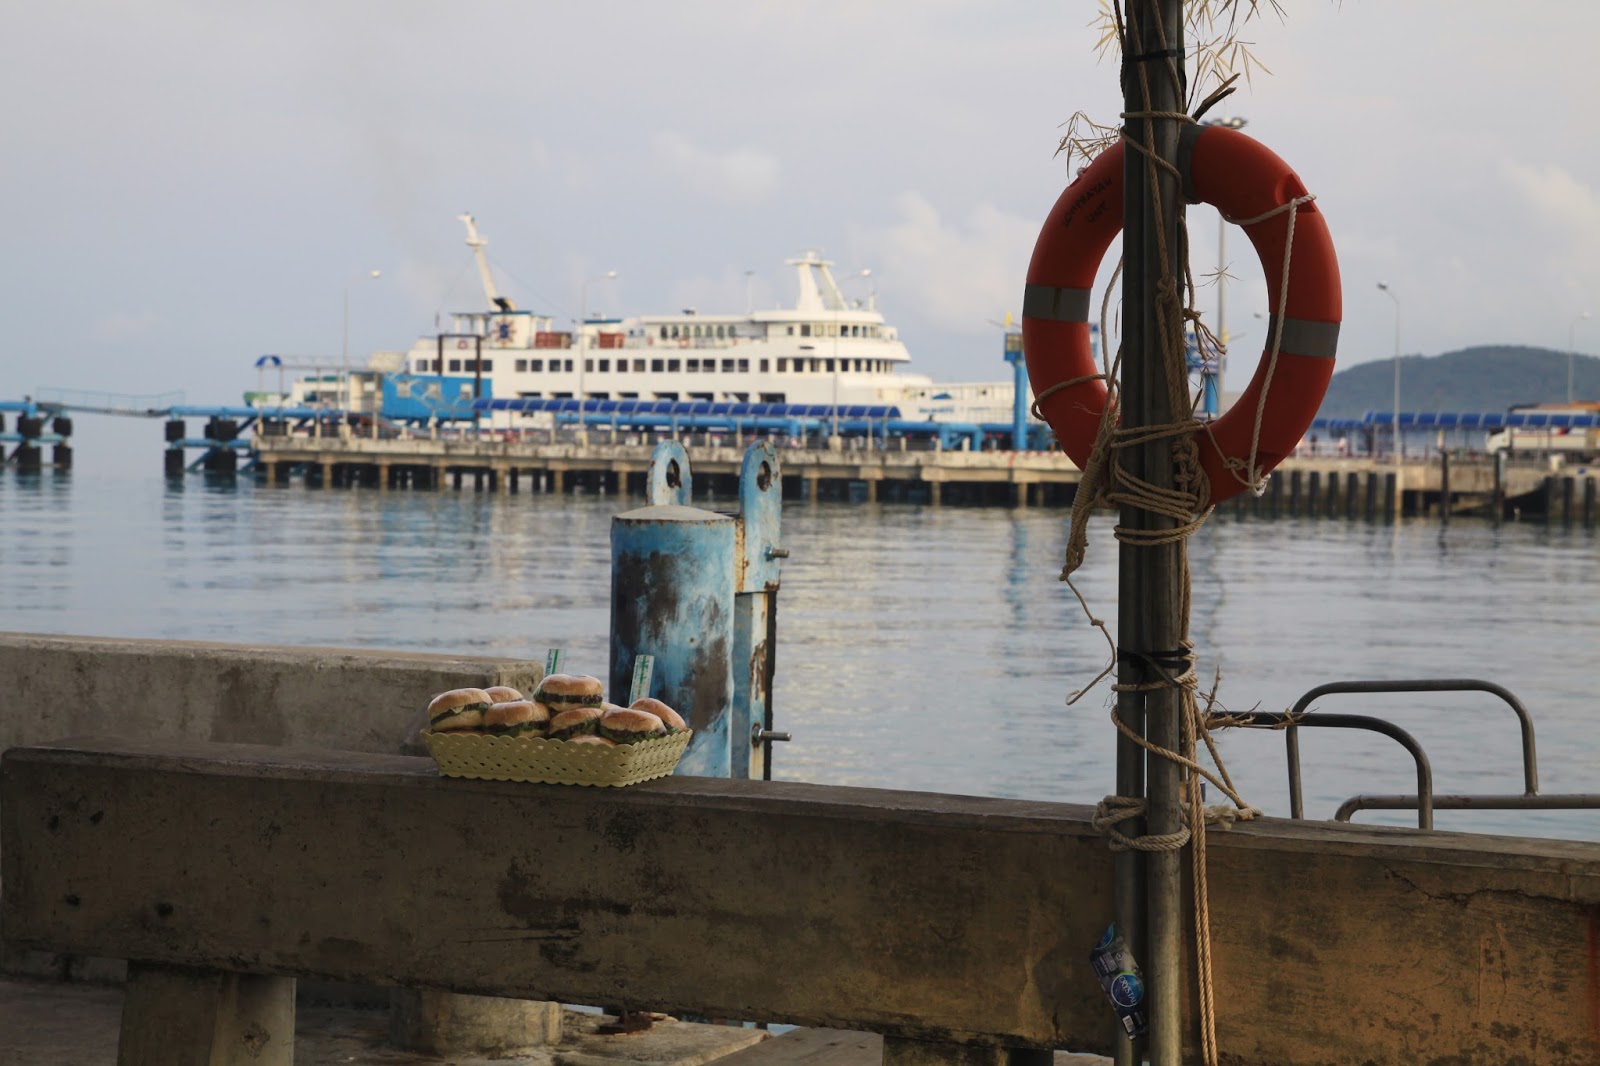 Surat Thani Ferry, Koh Samui Ferry